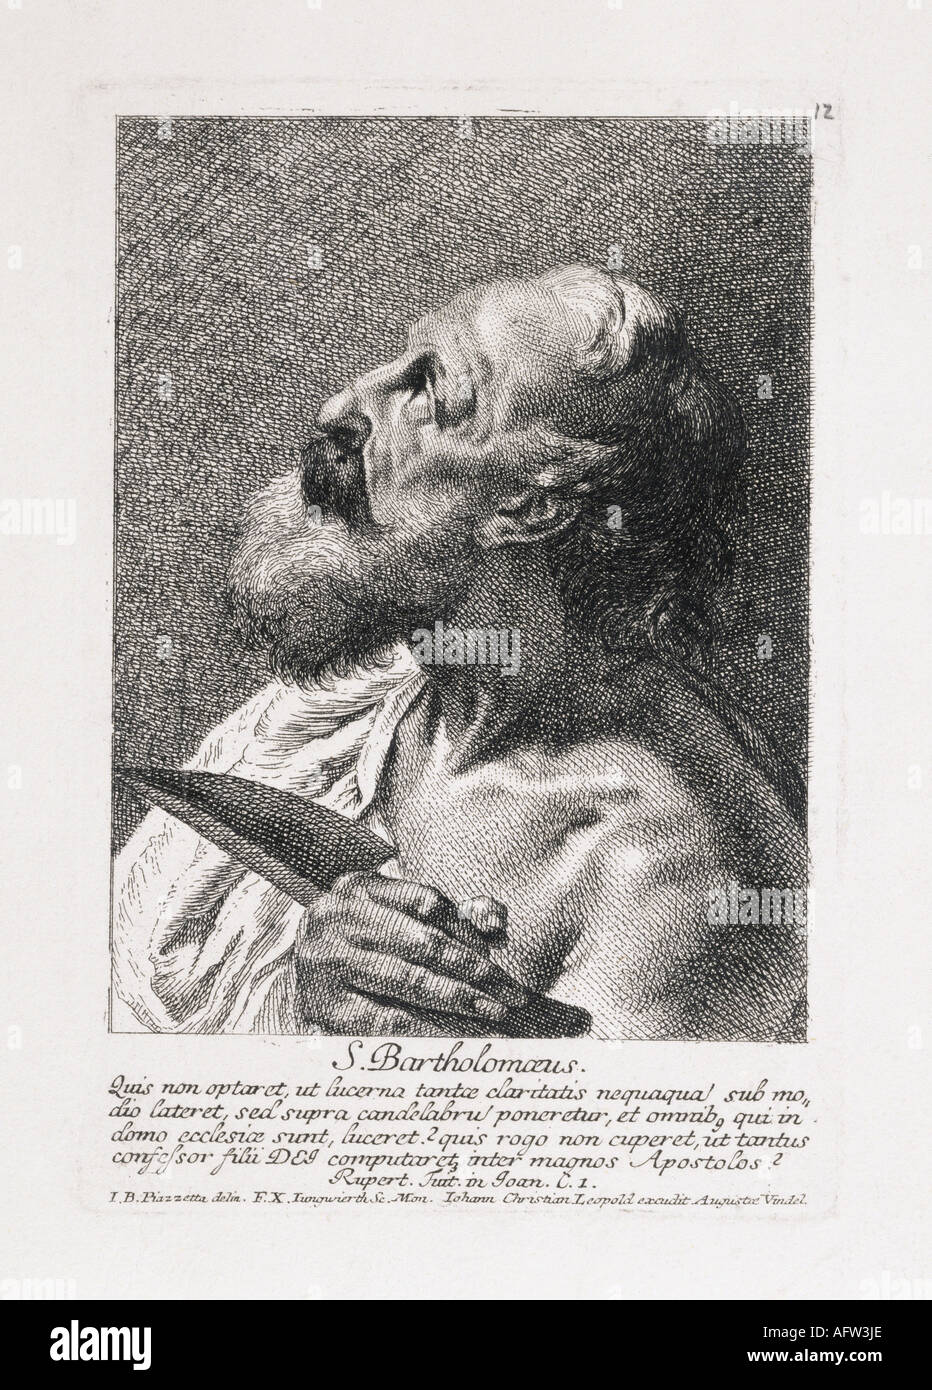 Bartholomew, + circa 51, Apostle, Saint, portrait, engraving by Johann Christian Leopold, Augsburg, 18th century,  religion, christianity, Saints,  martyr, knife, , Stock Photo